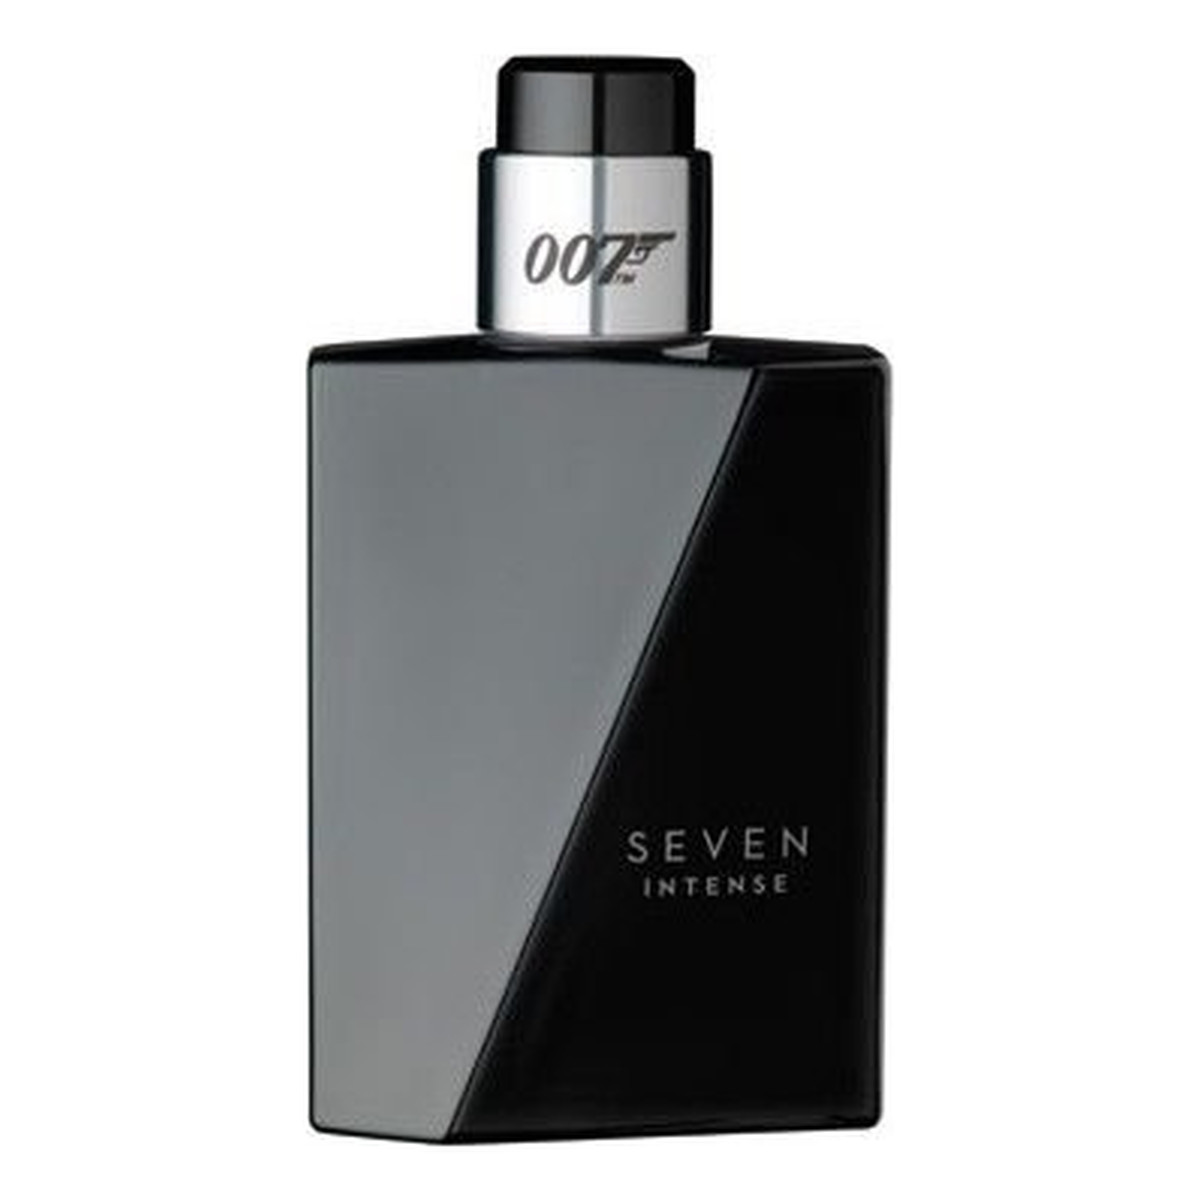 James Bond 007 Seven Woda perfumowana 75ml